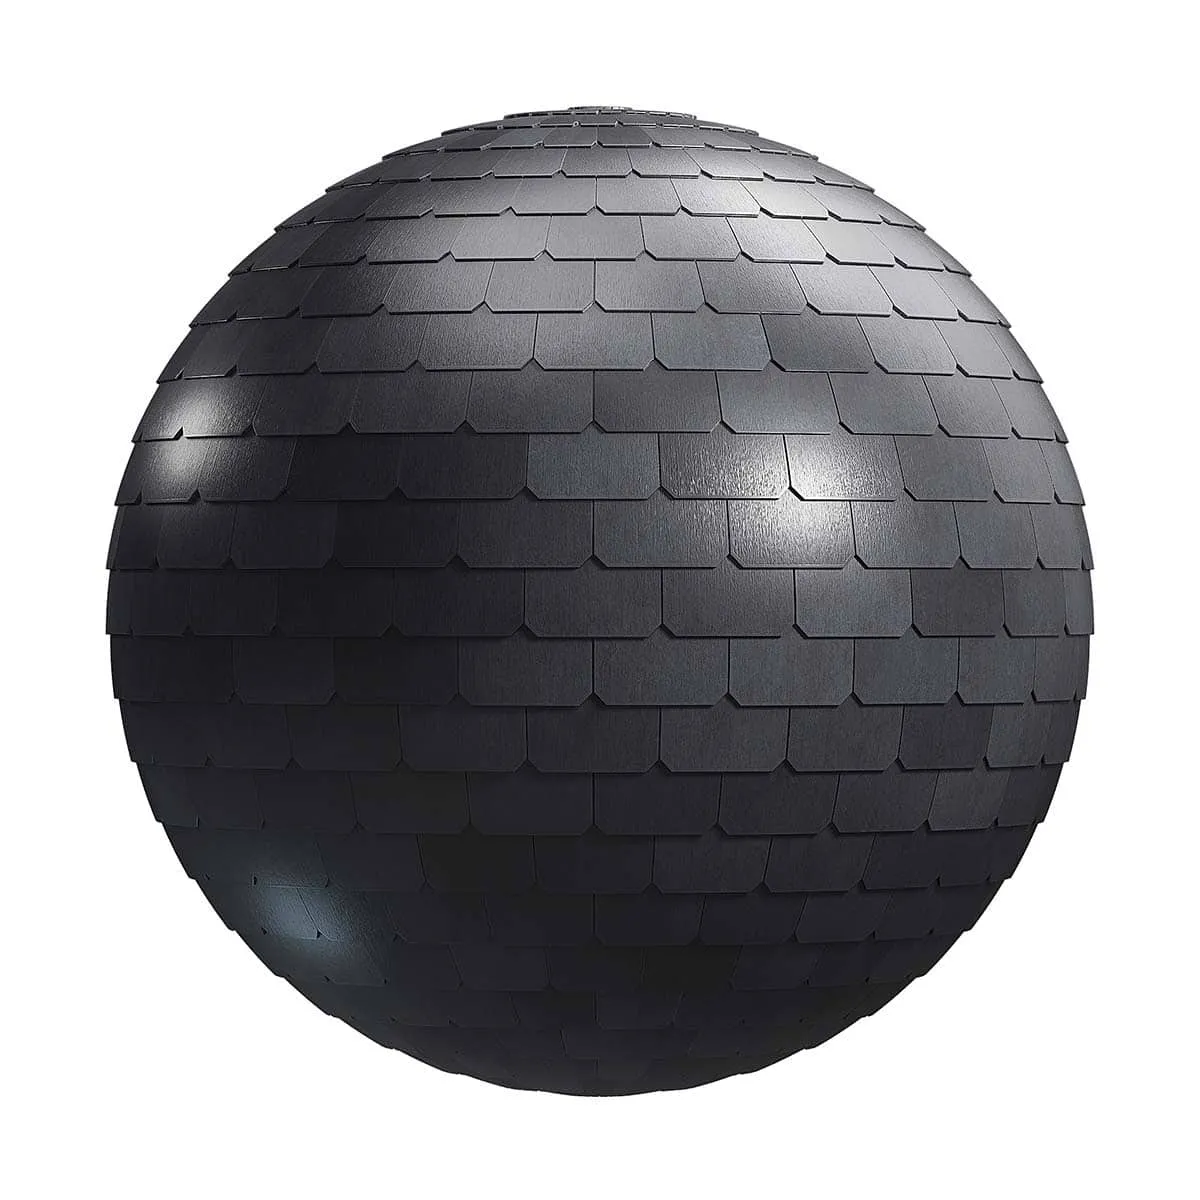 PBR Textures Volume 22 – Roofs – 4K – 8K – black_metal_tiles_roof_22_90